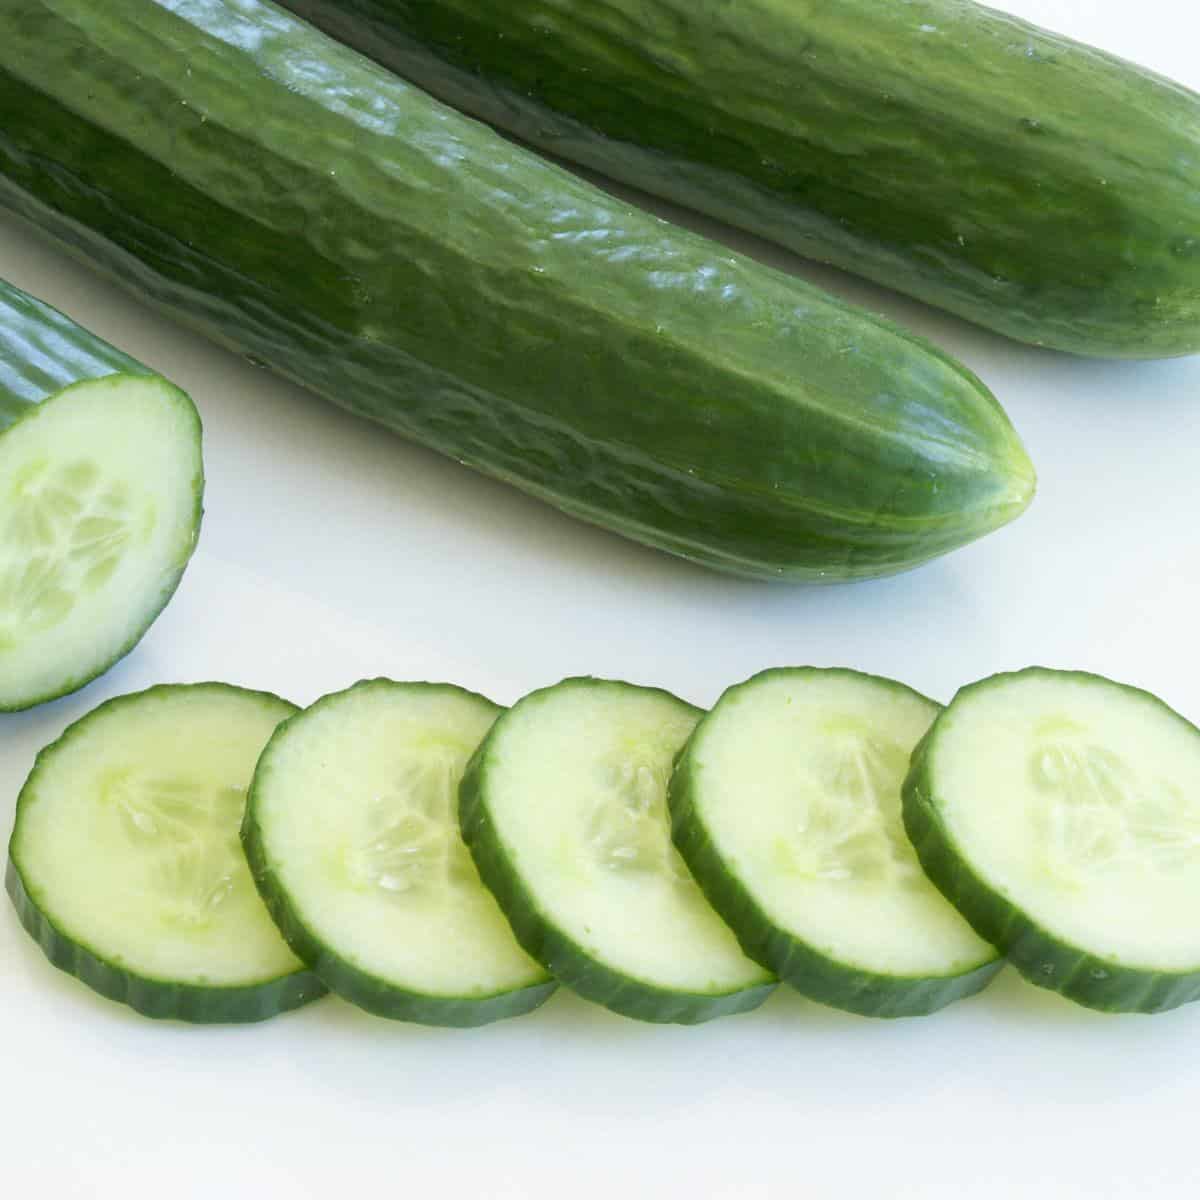 english cucumber sliced